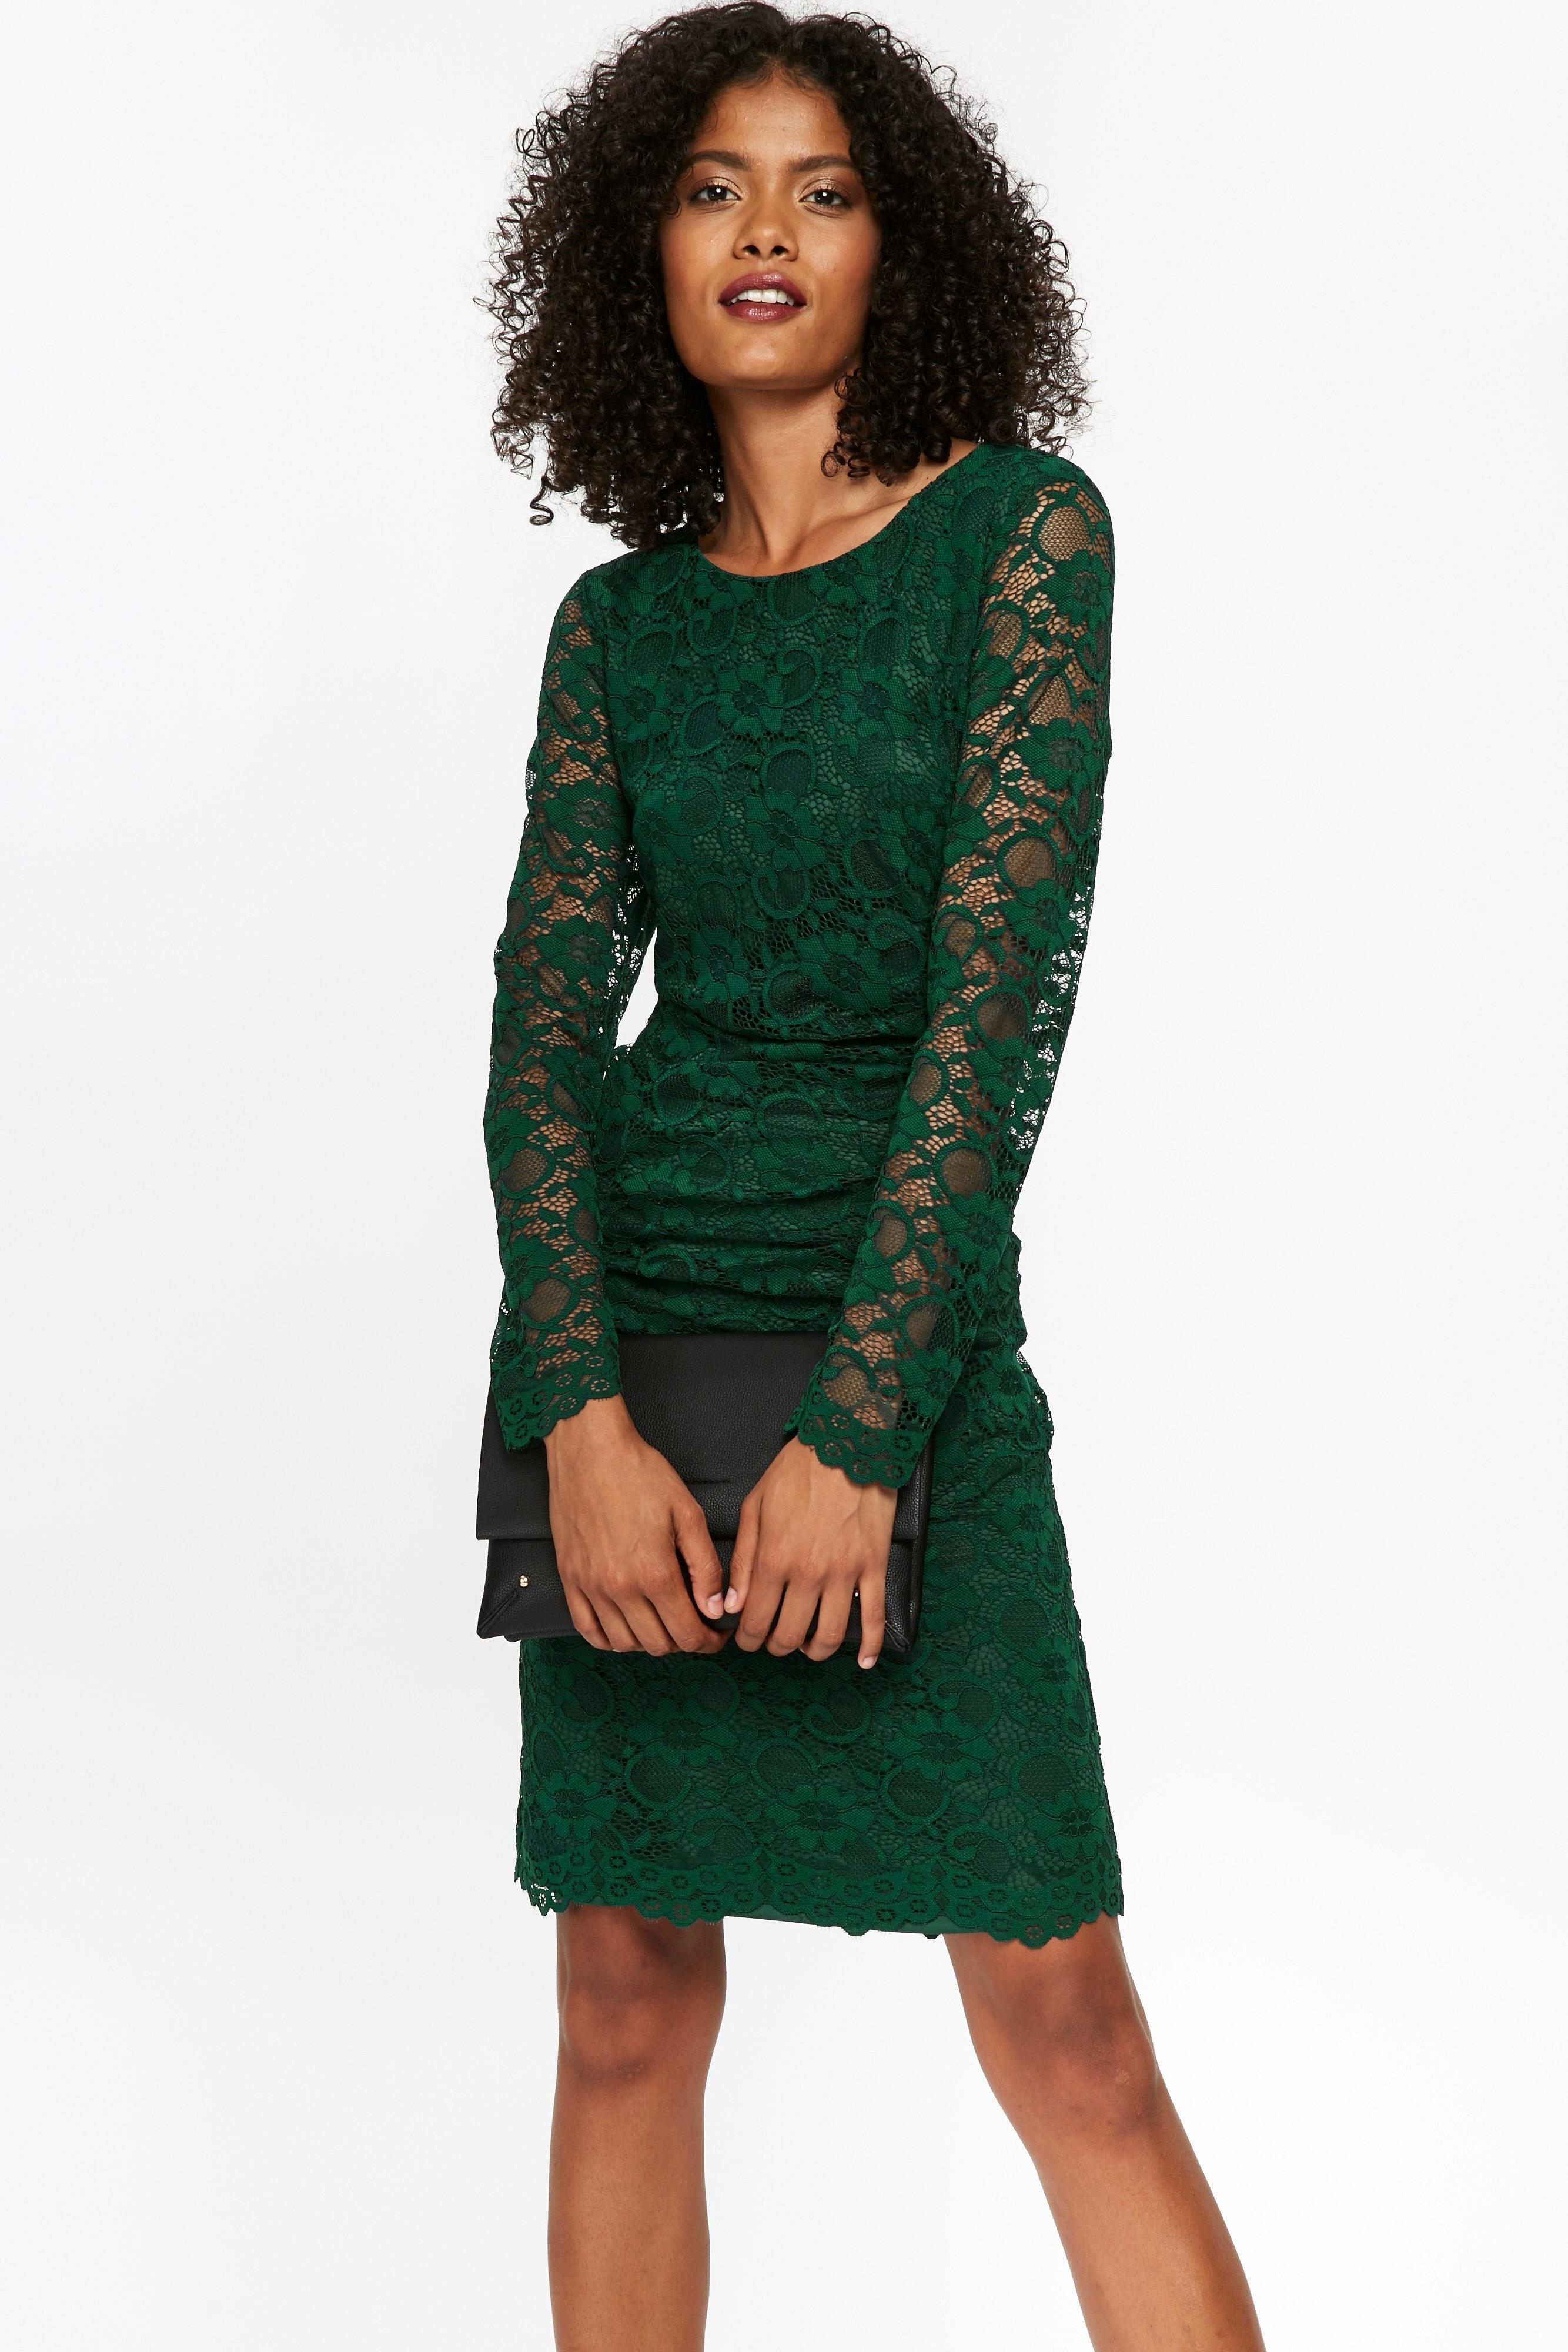 wallis green lace dress